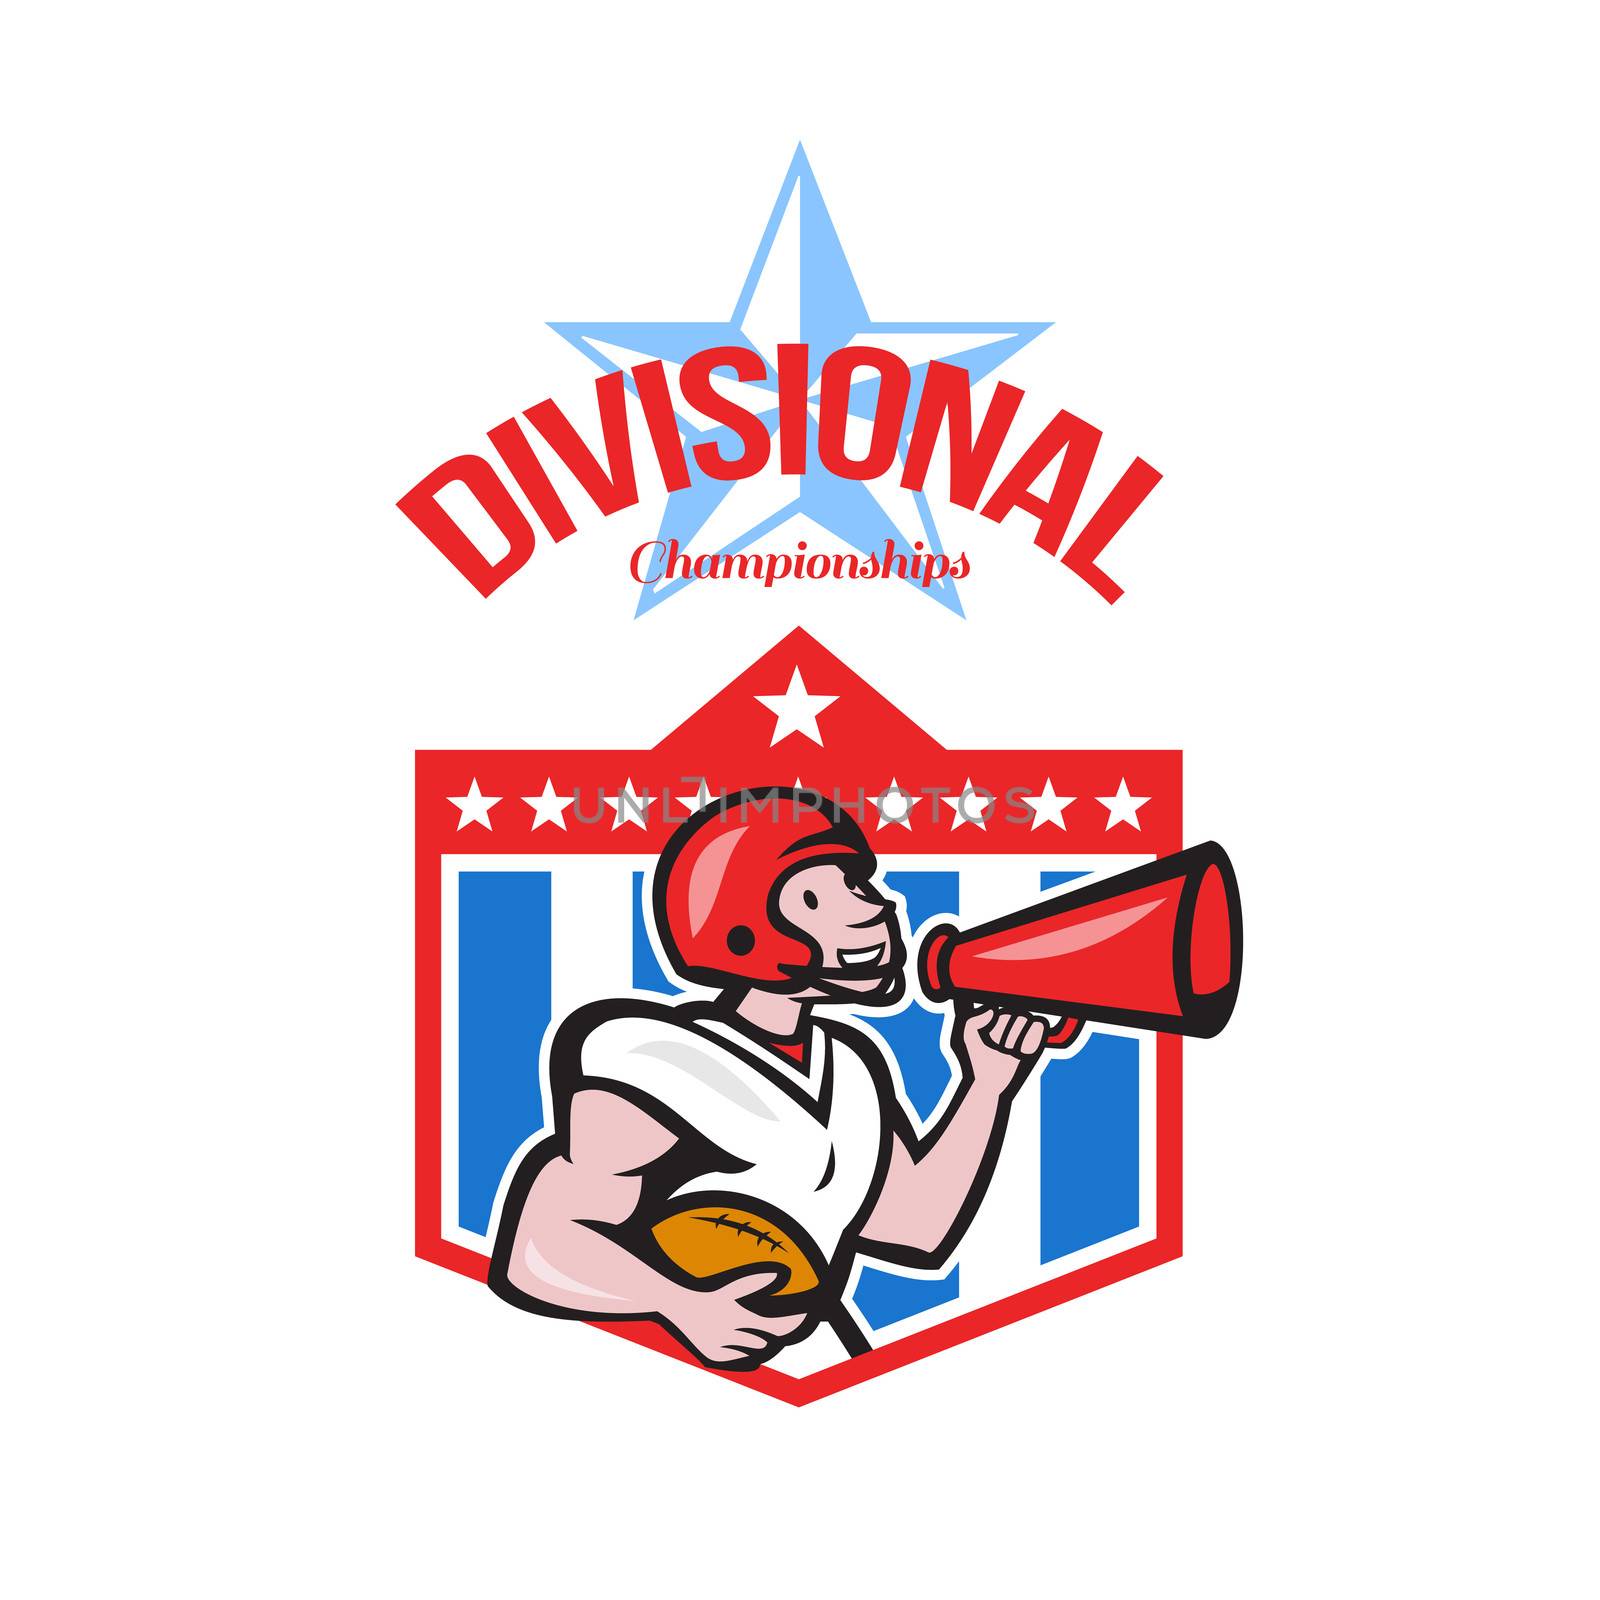 American Football Quarterback Divisional Champions by patrimonio